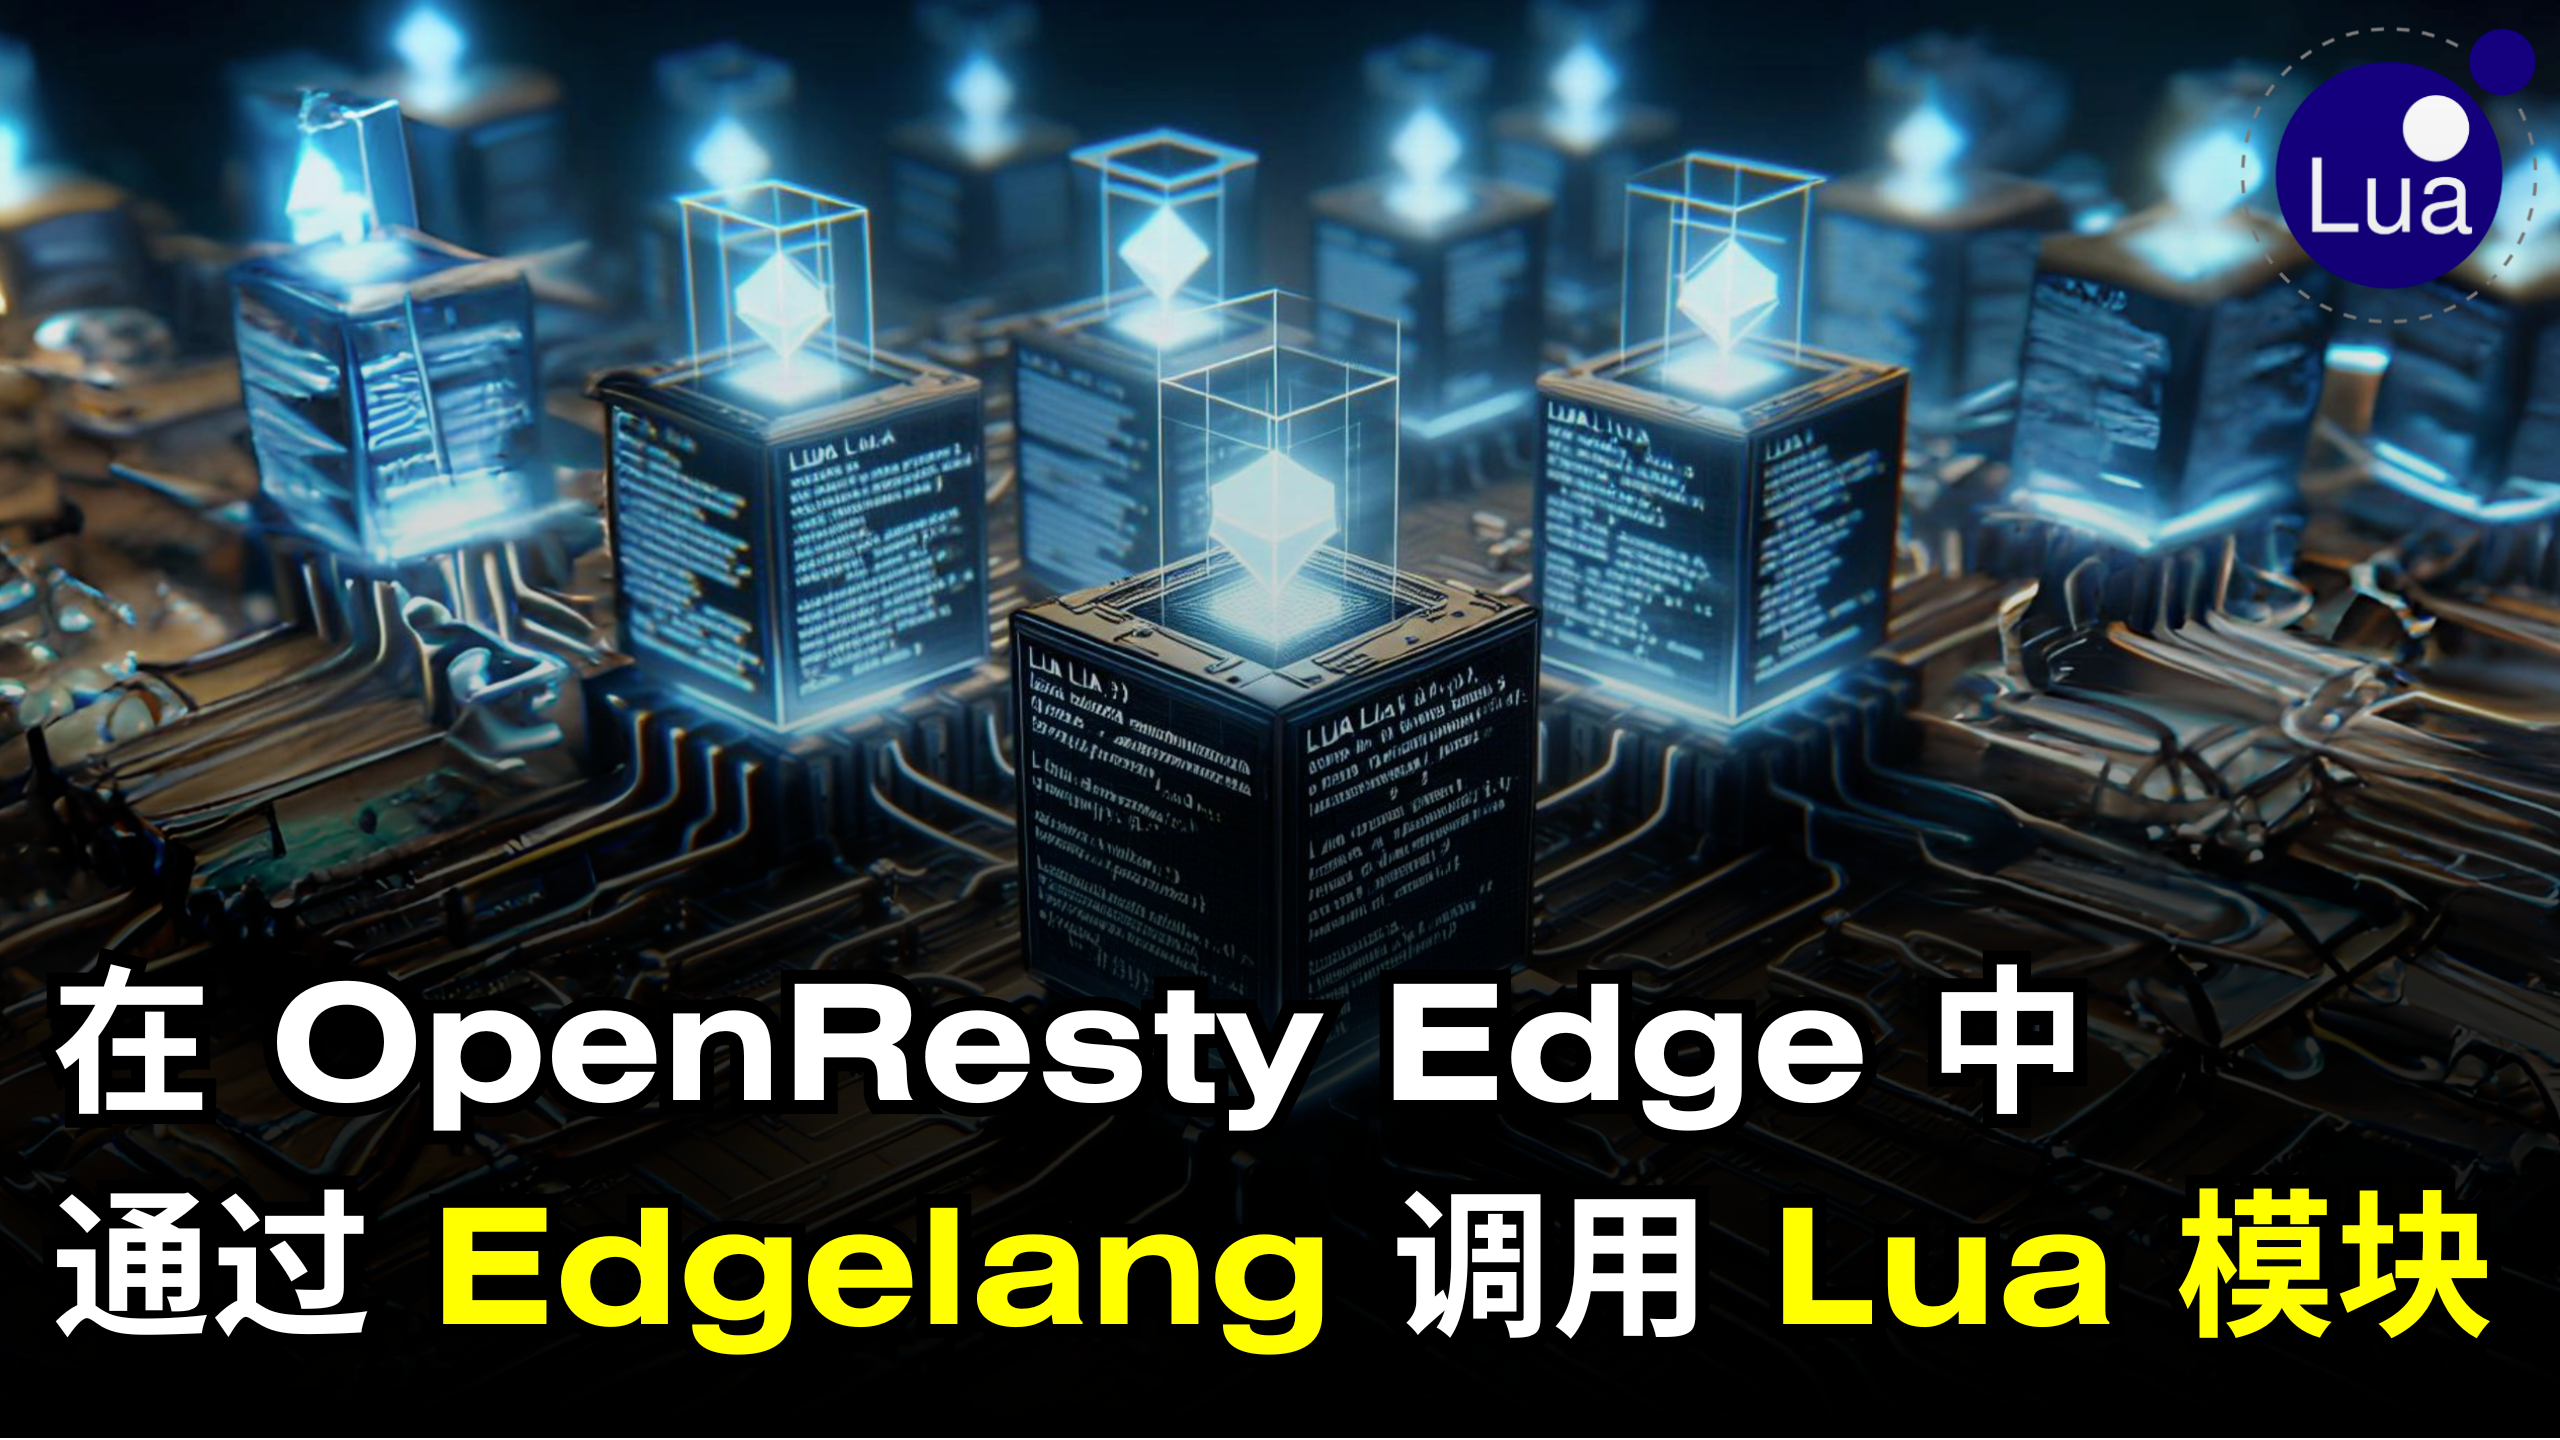 在 OpenResty Edge 中透過 Edgelang 呼叫 Lua 模組